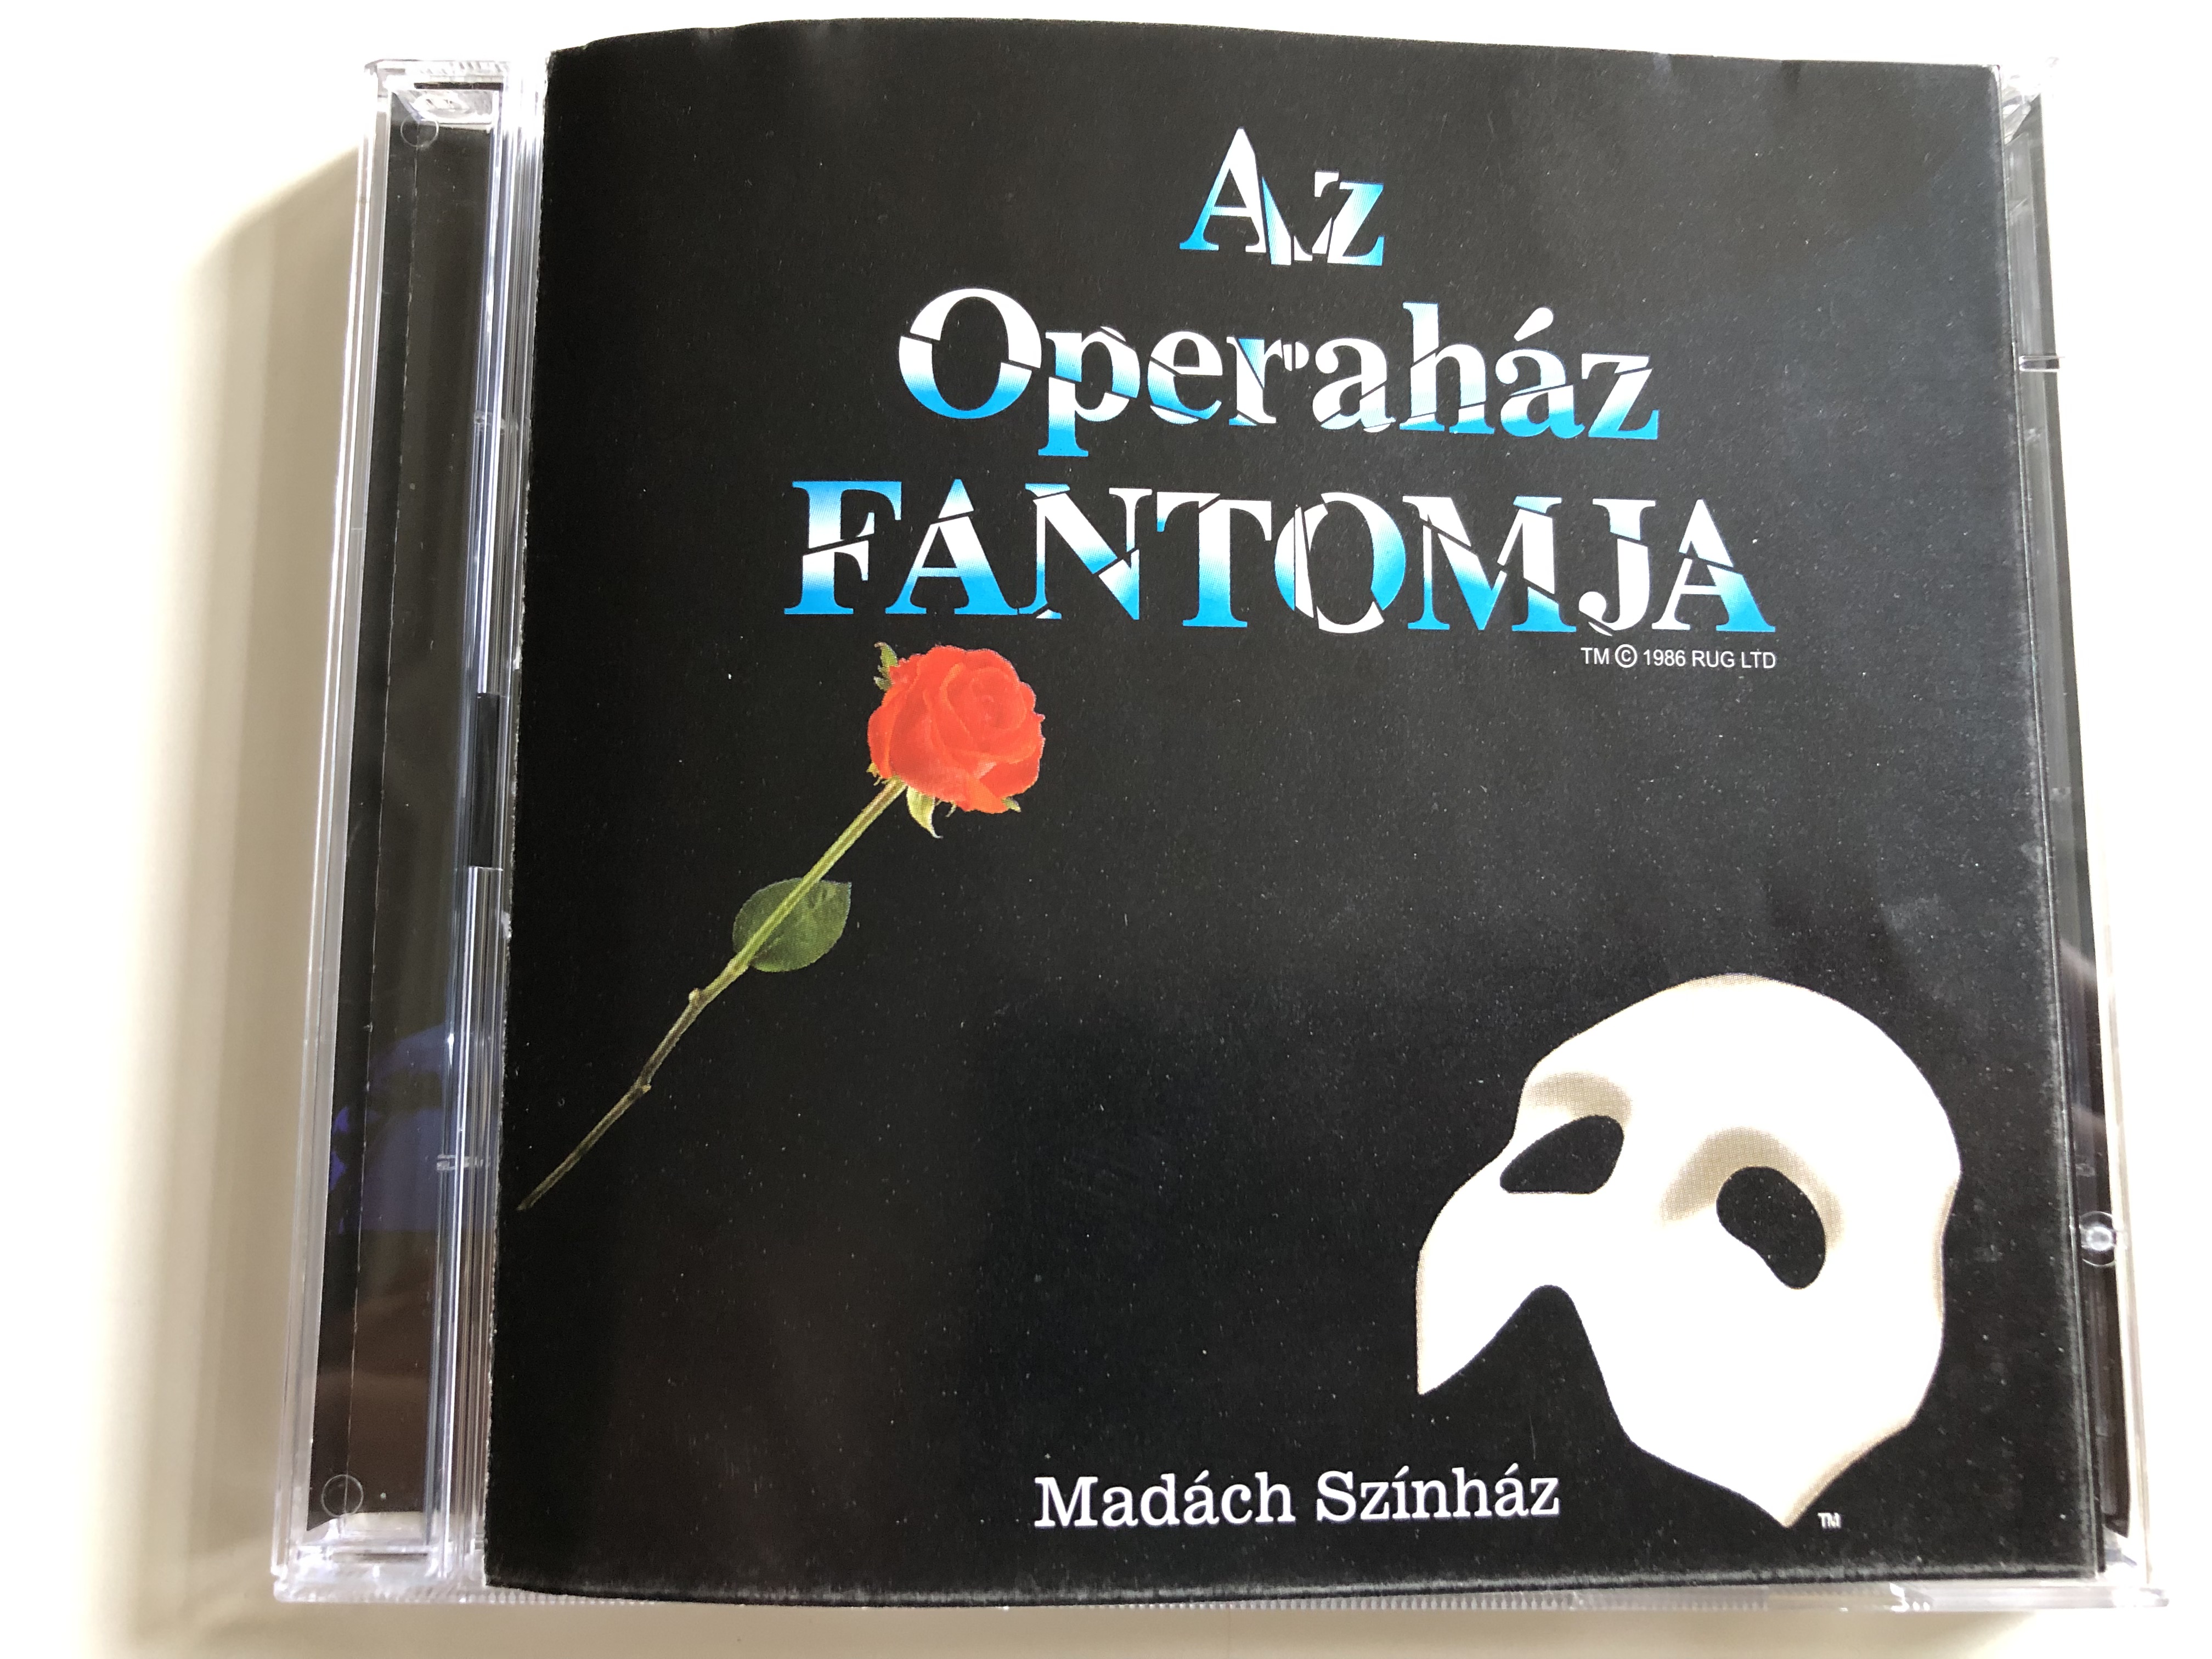 az-operah-z-fantomja-mad-ch-sz-nh-z-andrew-lloyd-webber-the-phantom-of-the-opera-charles-hart-directed-by-szirtes-tam-s-2x-audio-cd-2003-1-.jpg